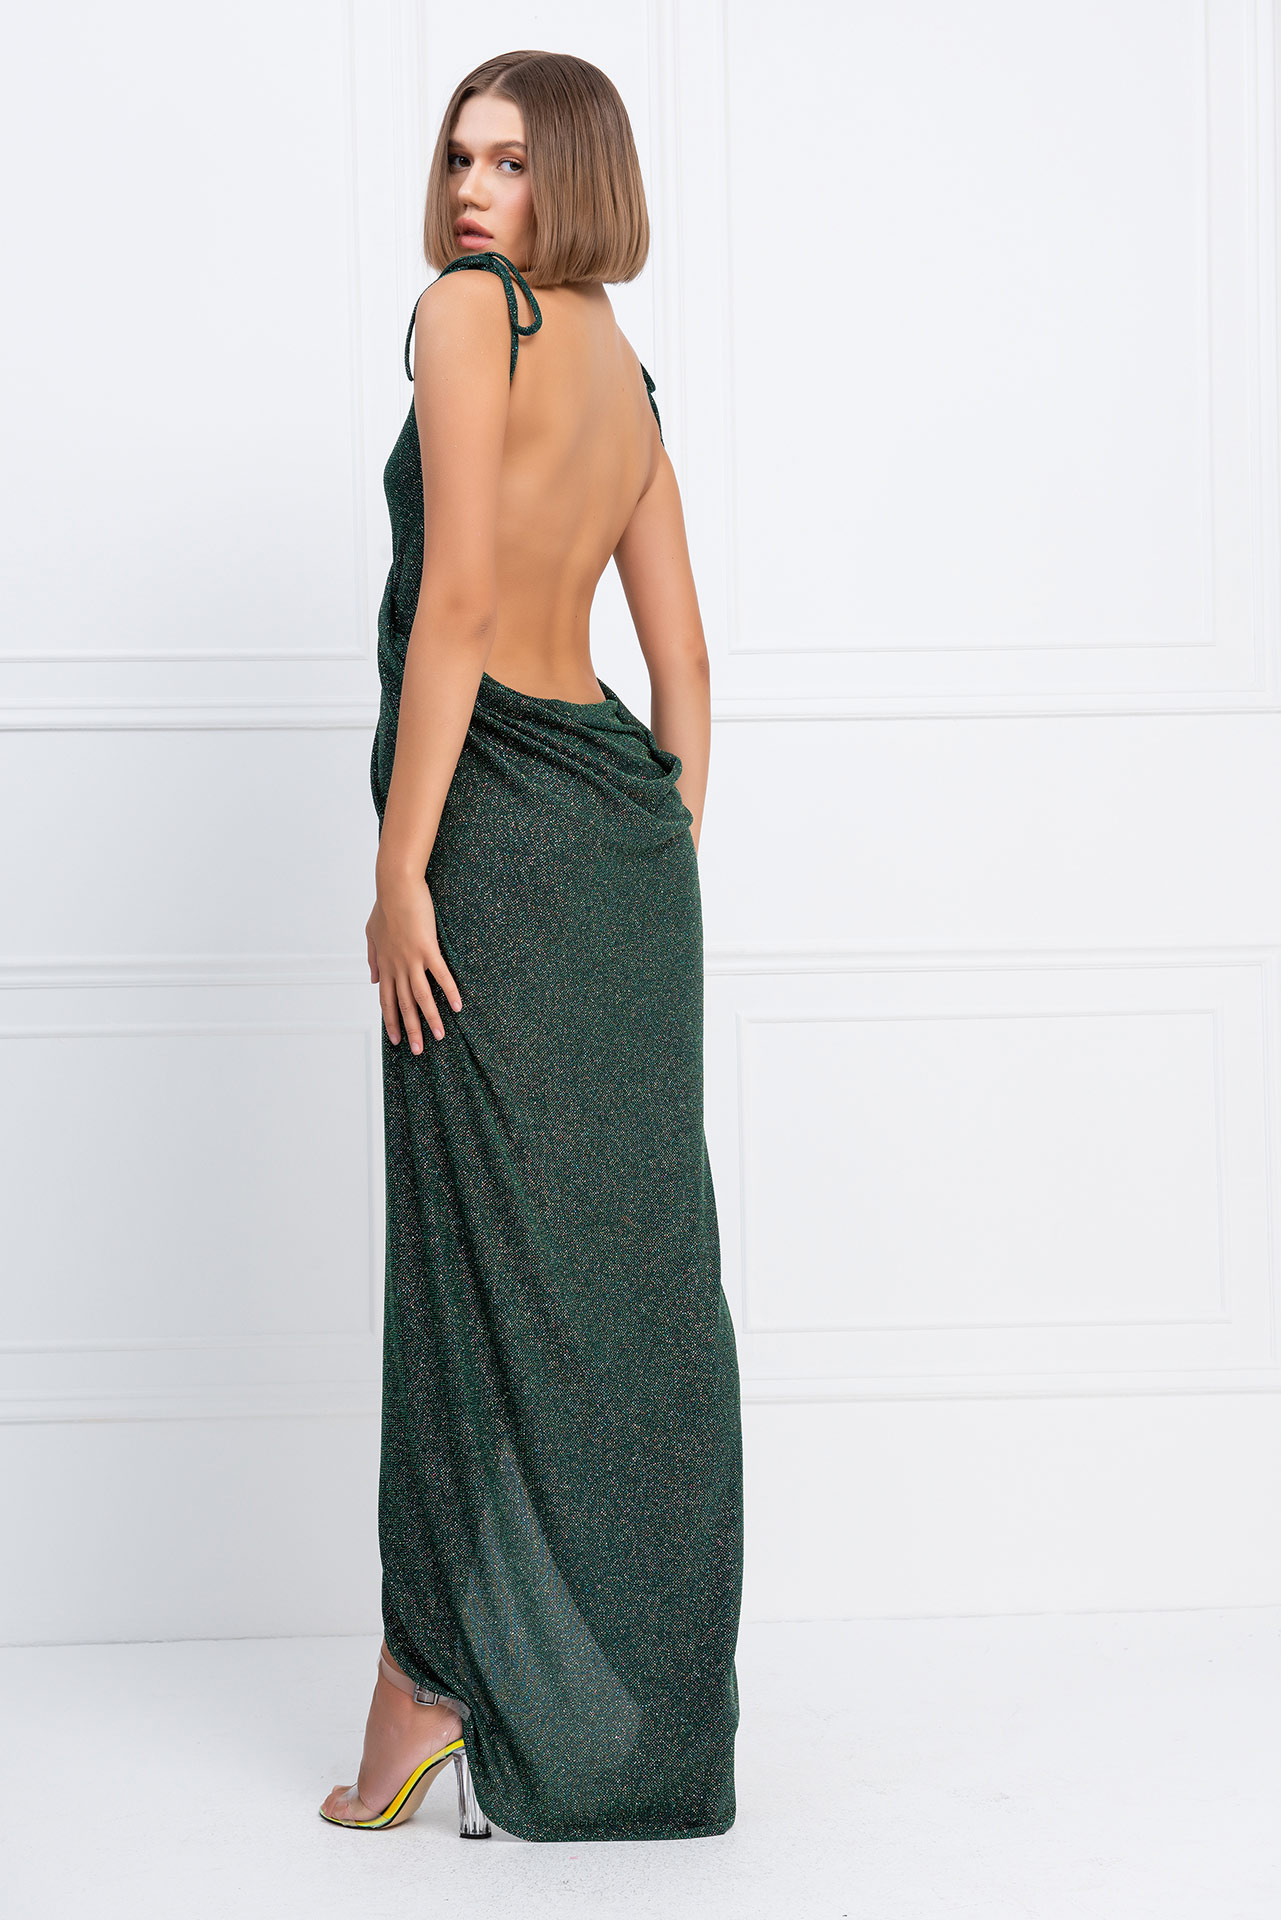 Wholesale Glittery Dark Green Crossover Cami Dress